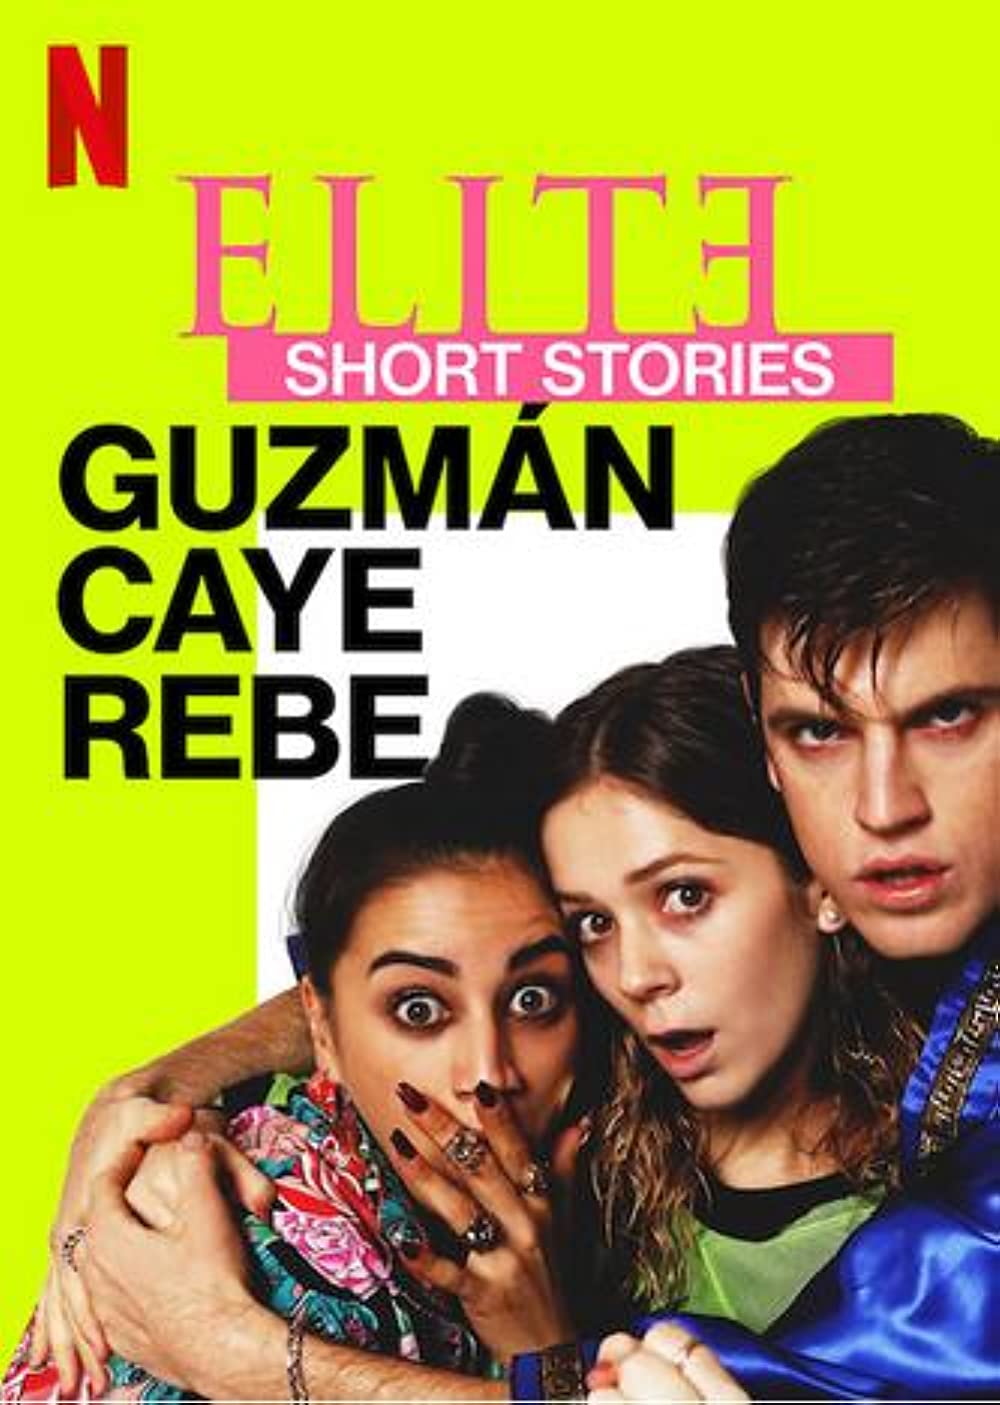 Filmbeschreibung zu Élite-Kurzgeschichten: Guzmán - Caye - Rebe